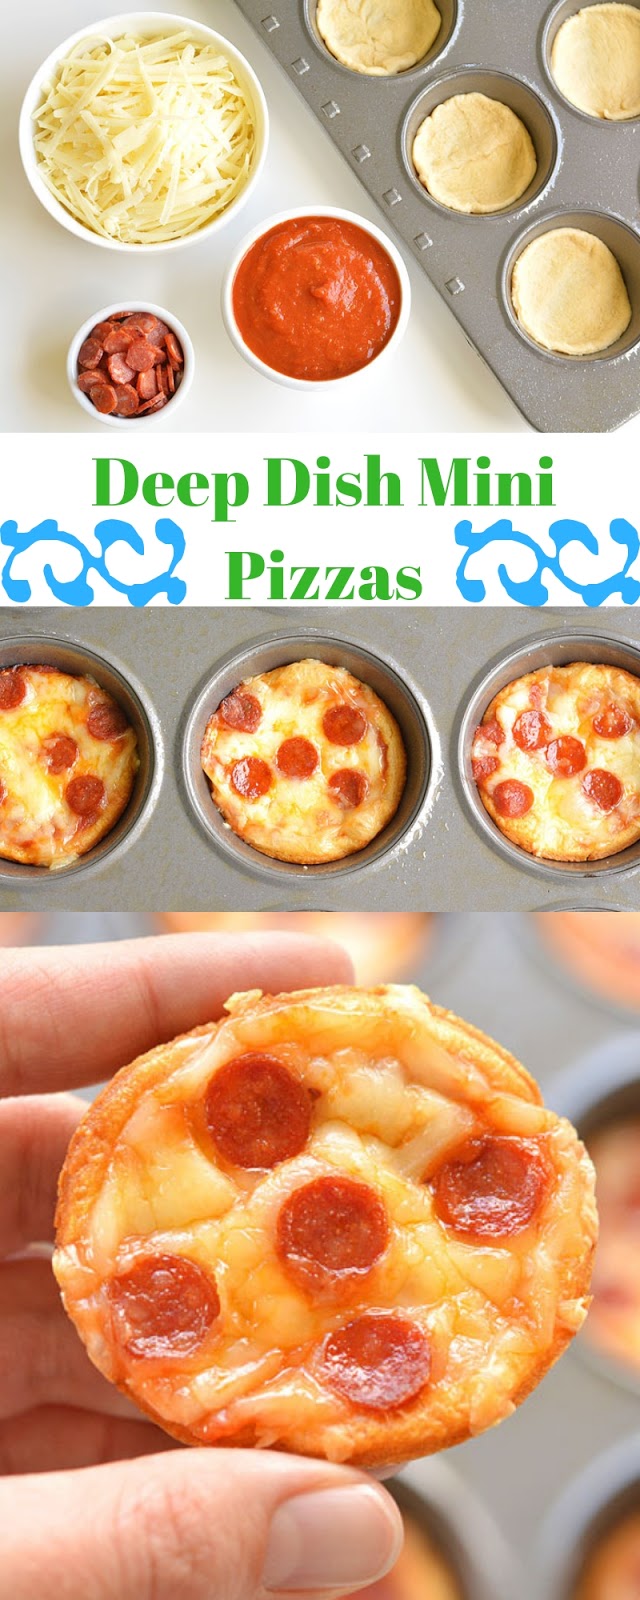 Deep Dish Mini Pizzas | Mimifunkitcthen